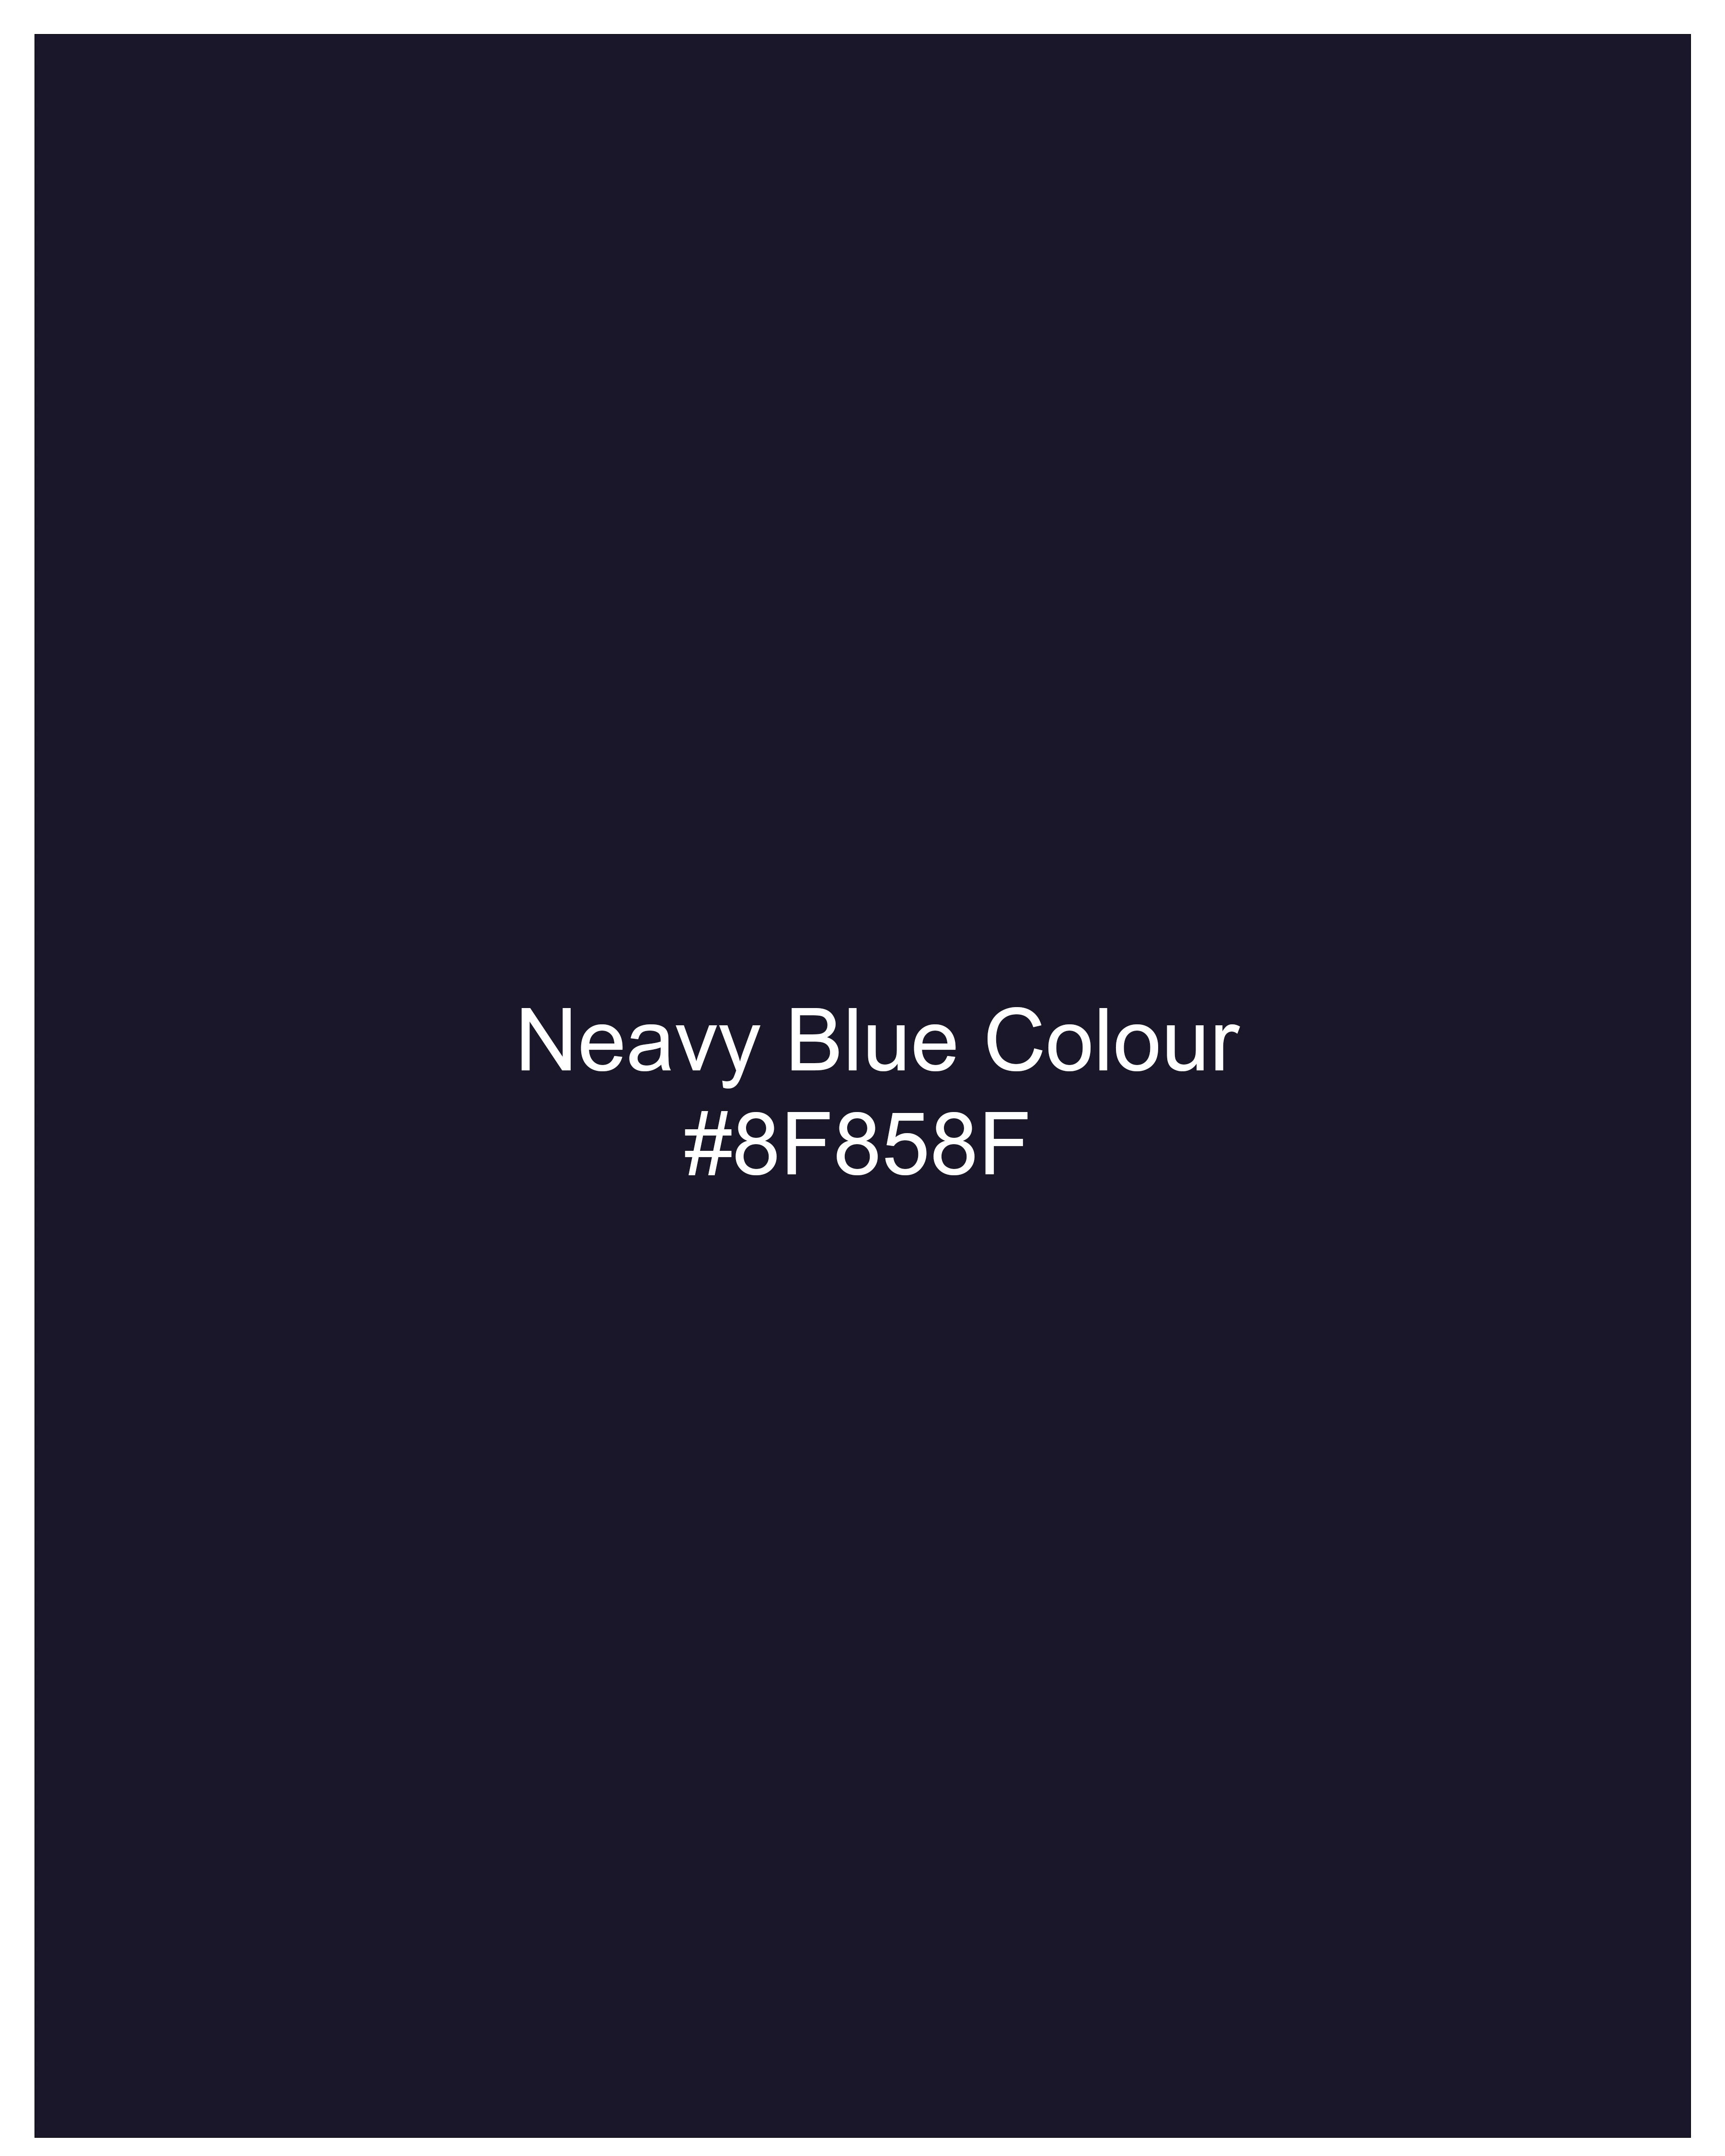 Navy Subtle Sheen Blue Bandhgala Suit